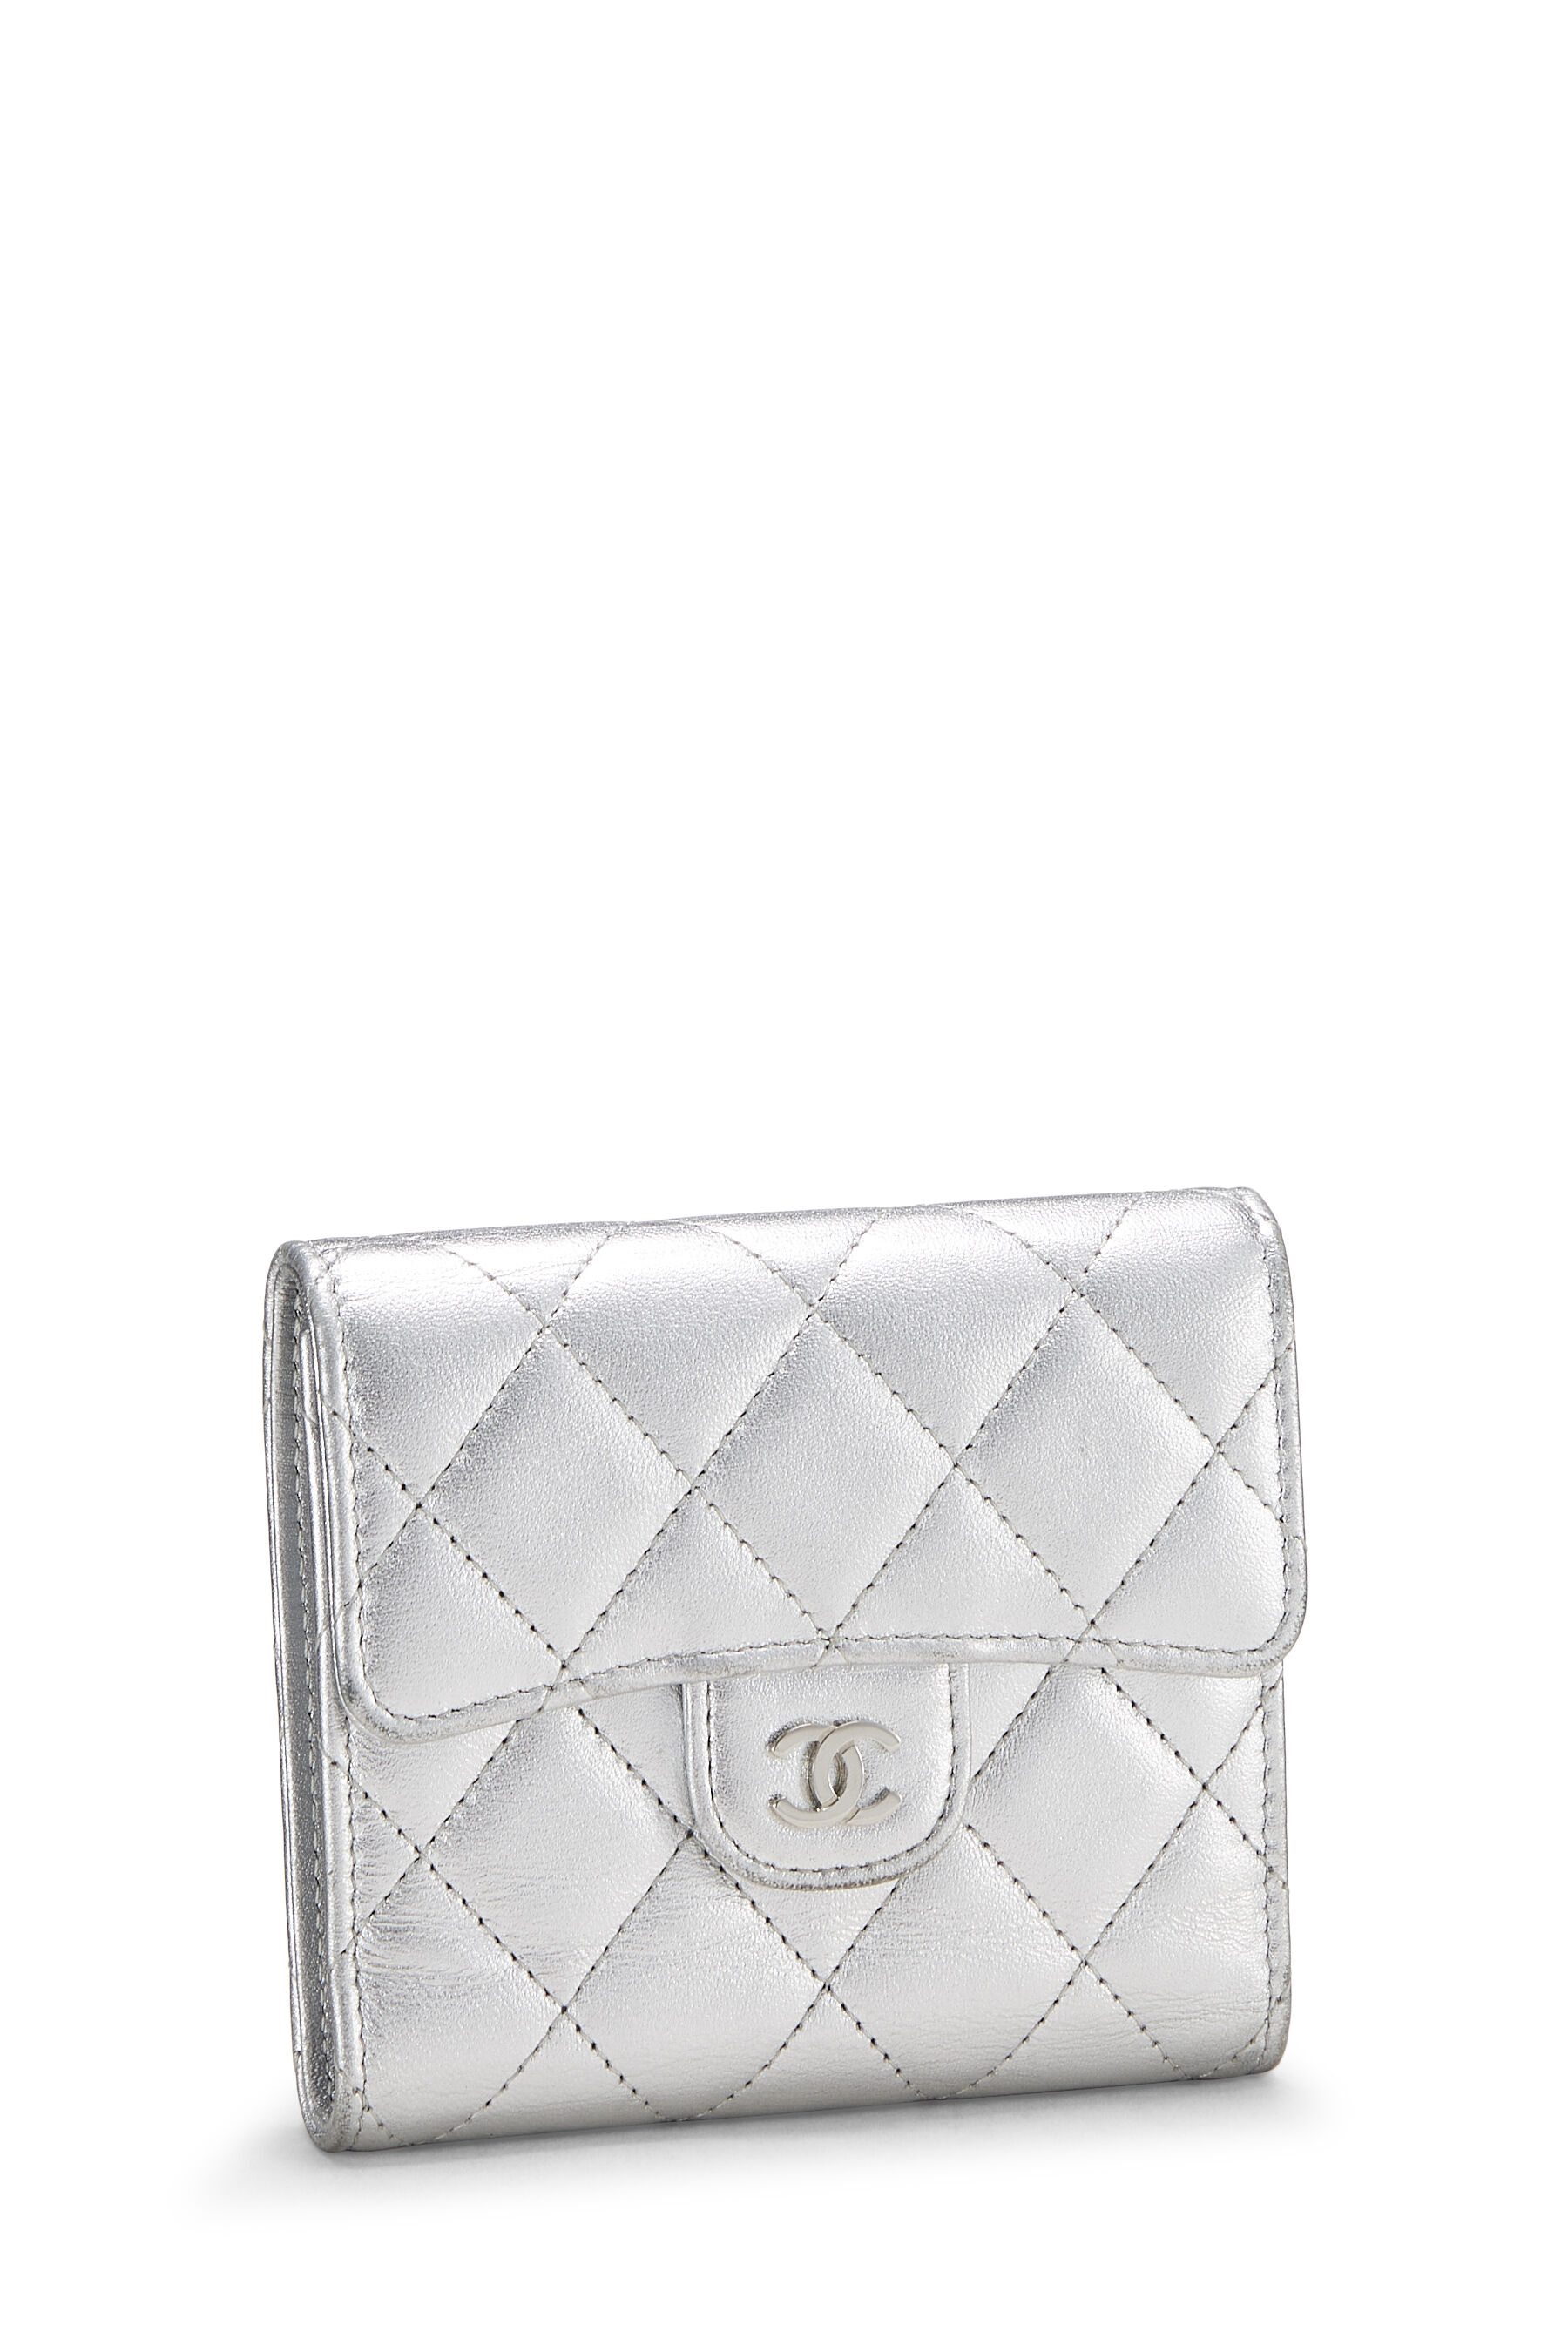 Chanel - Silver Lambskin Classic Flap Card Holder